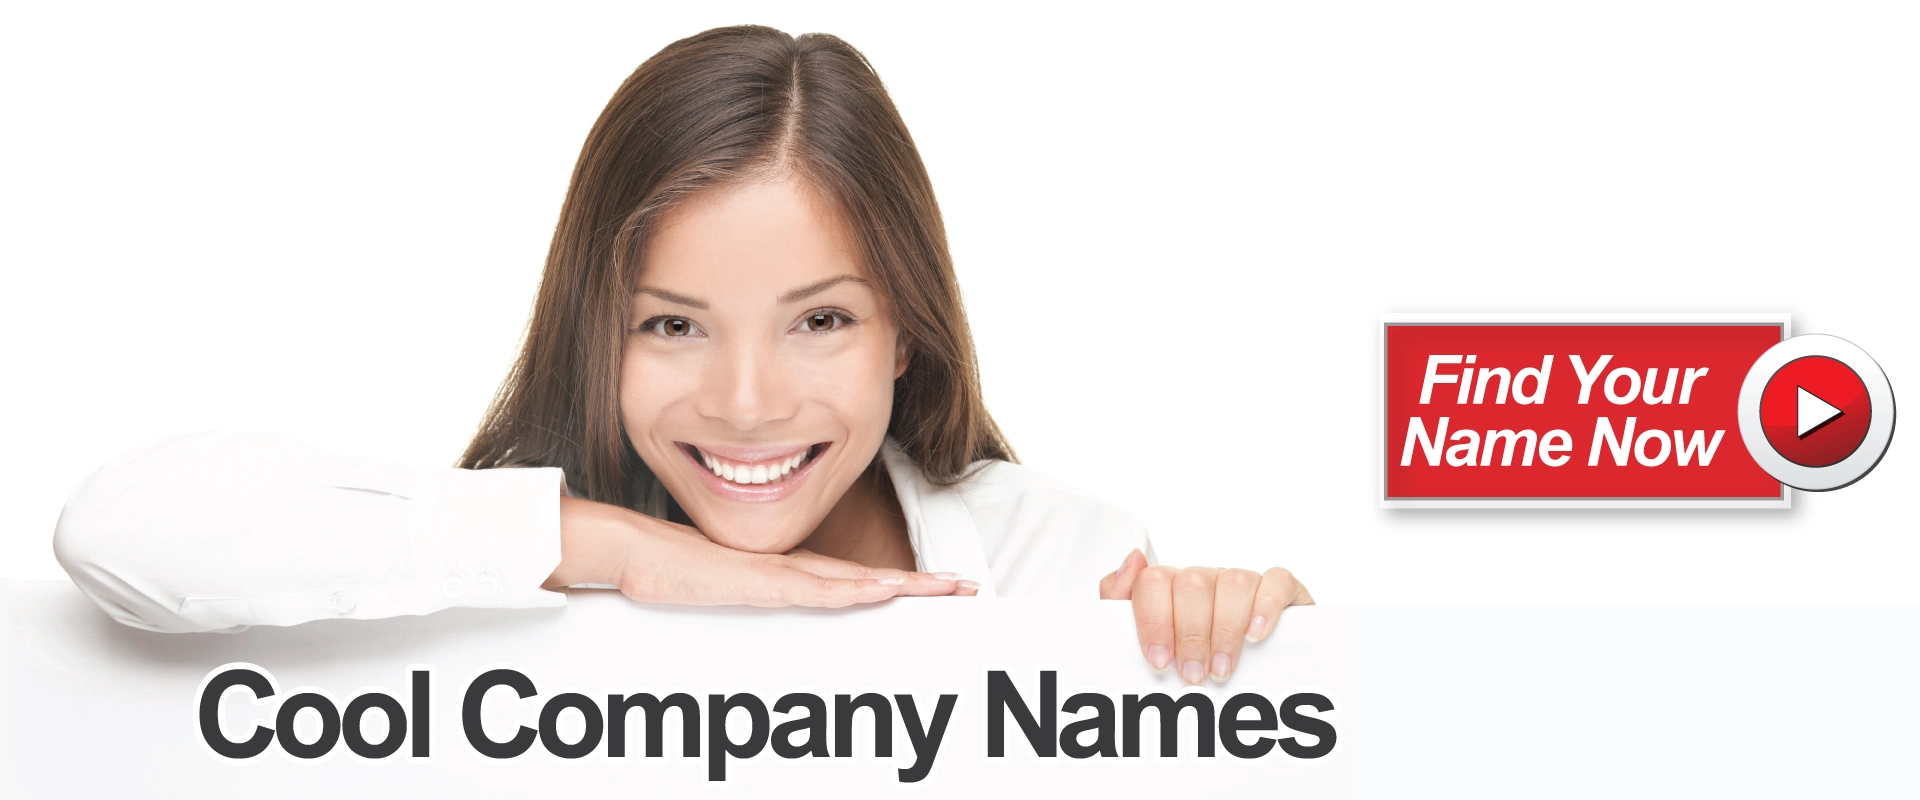 Cool Company Names